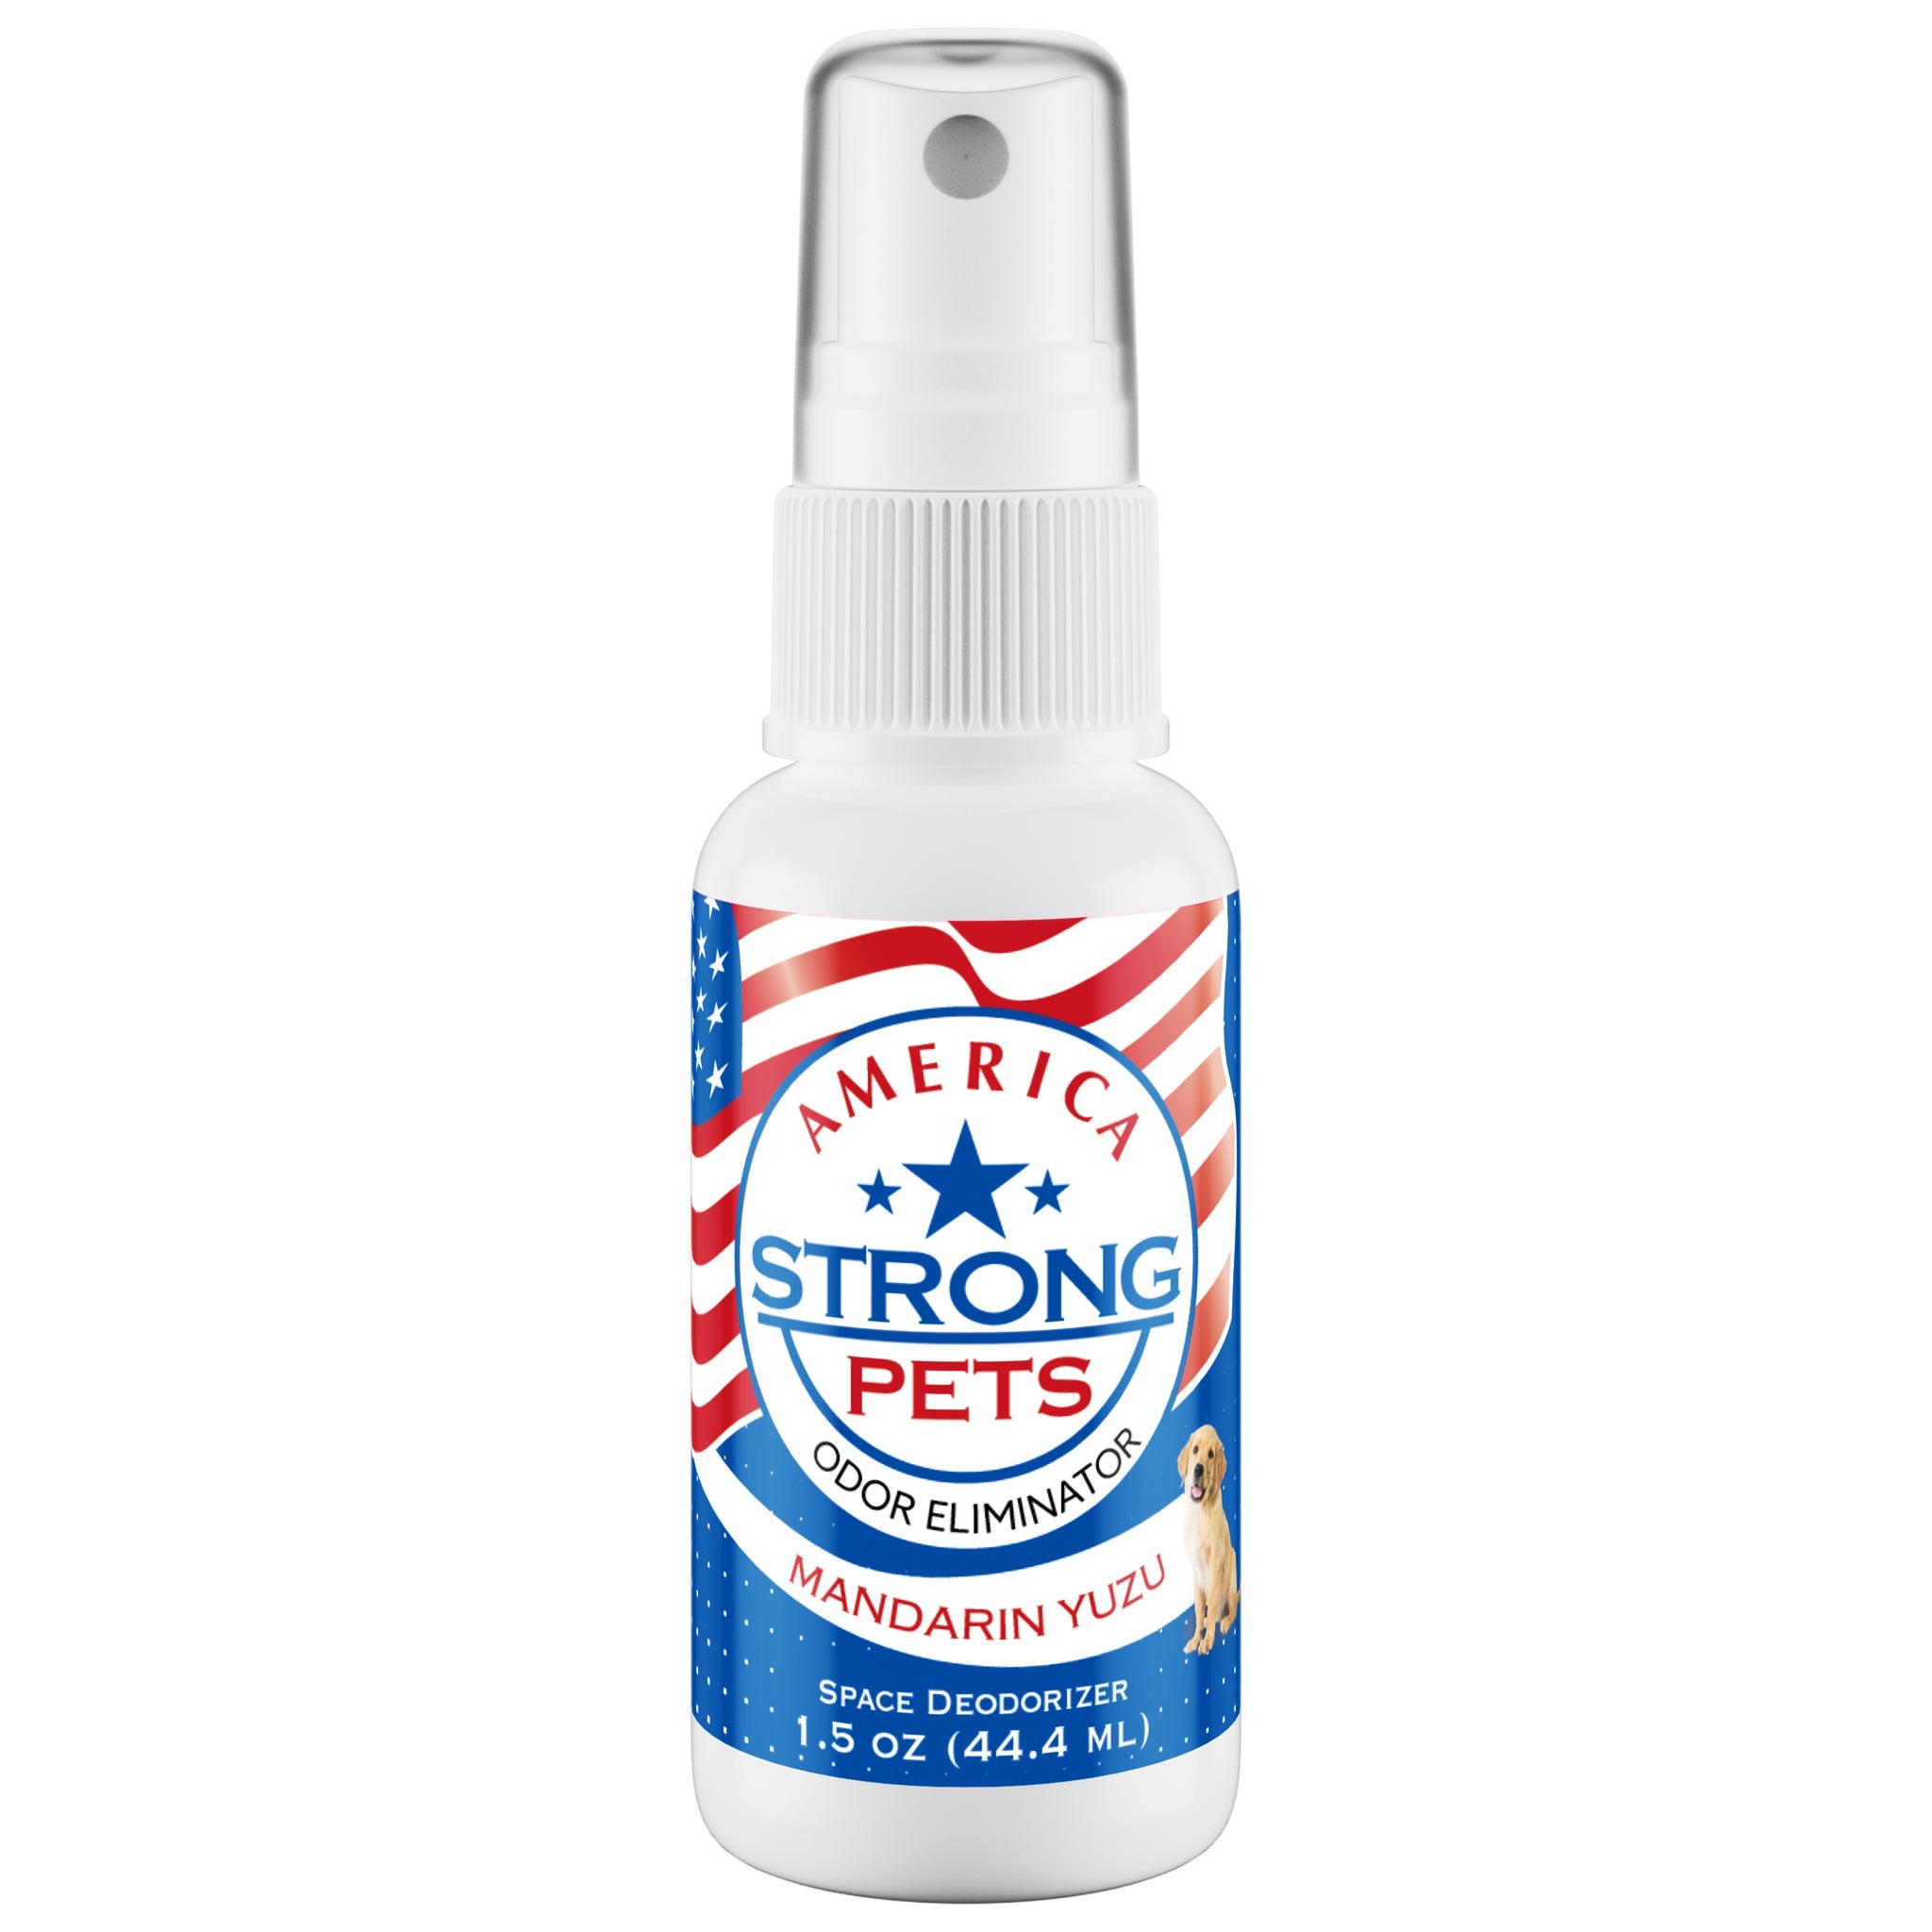 America Strong Pet Odor Eliminator - Mandarin Yuzu Scent Size: 1.5 fl oz